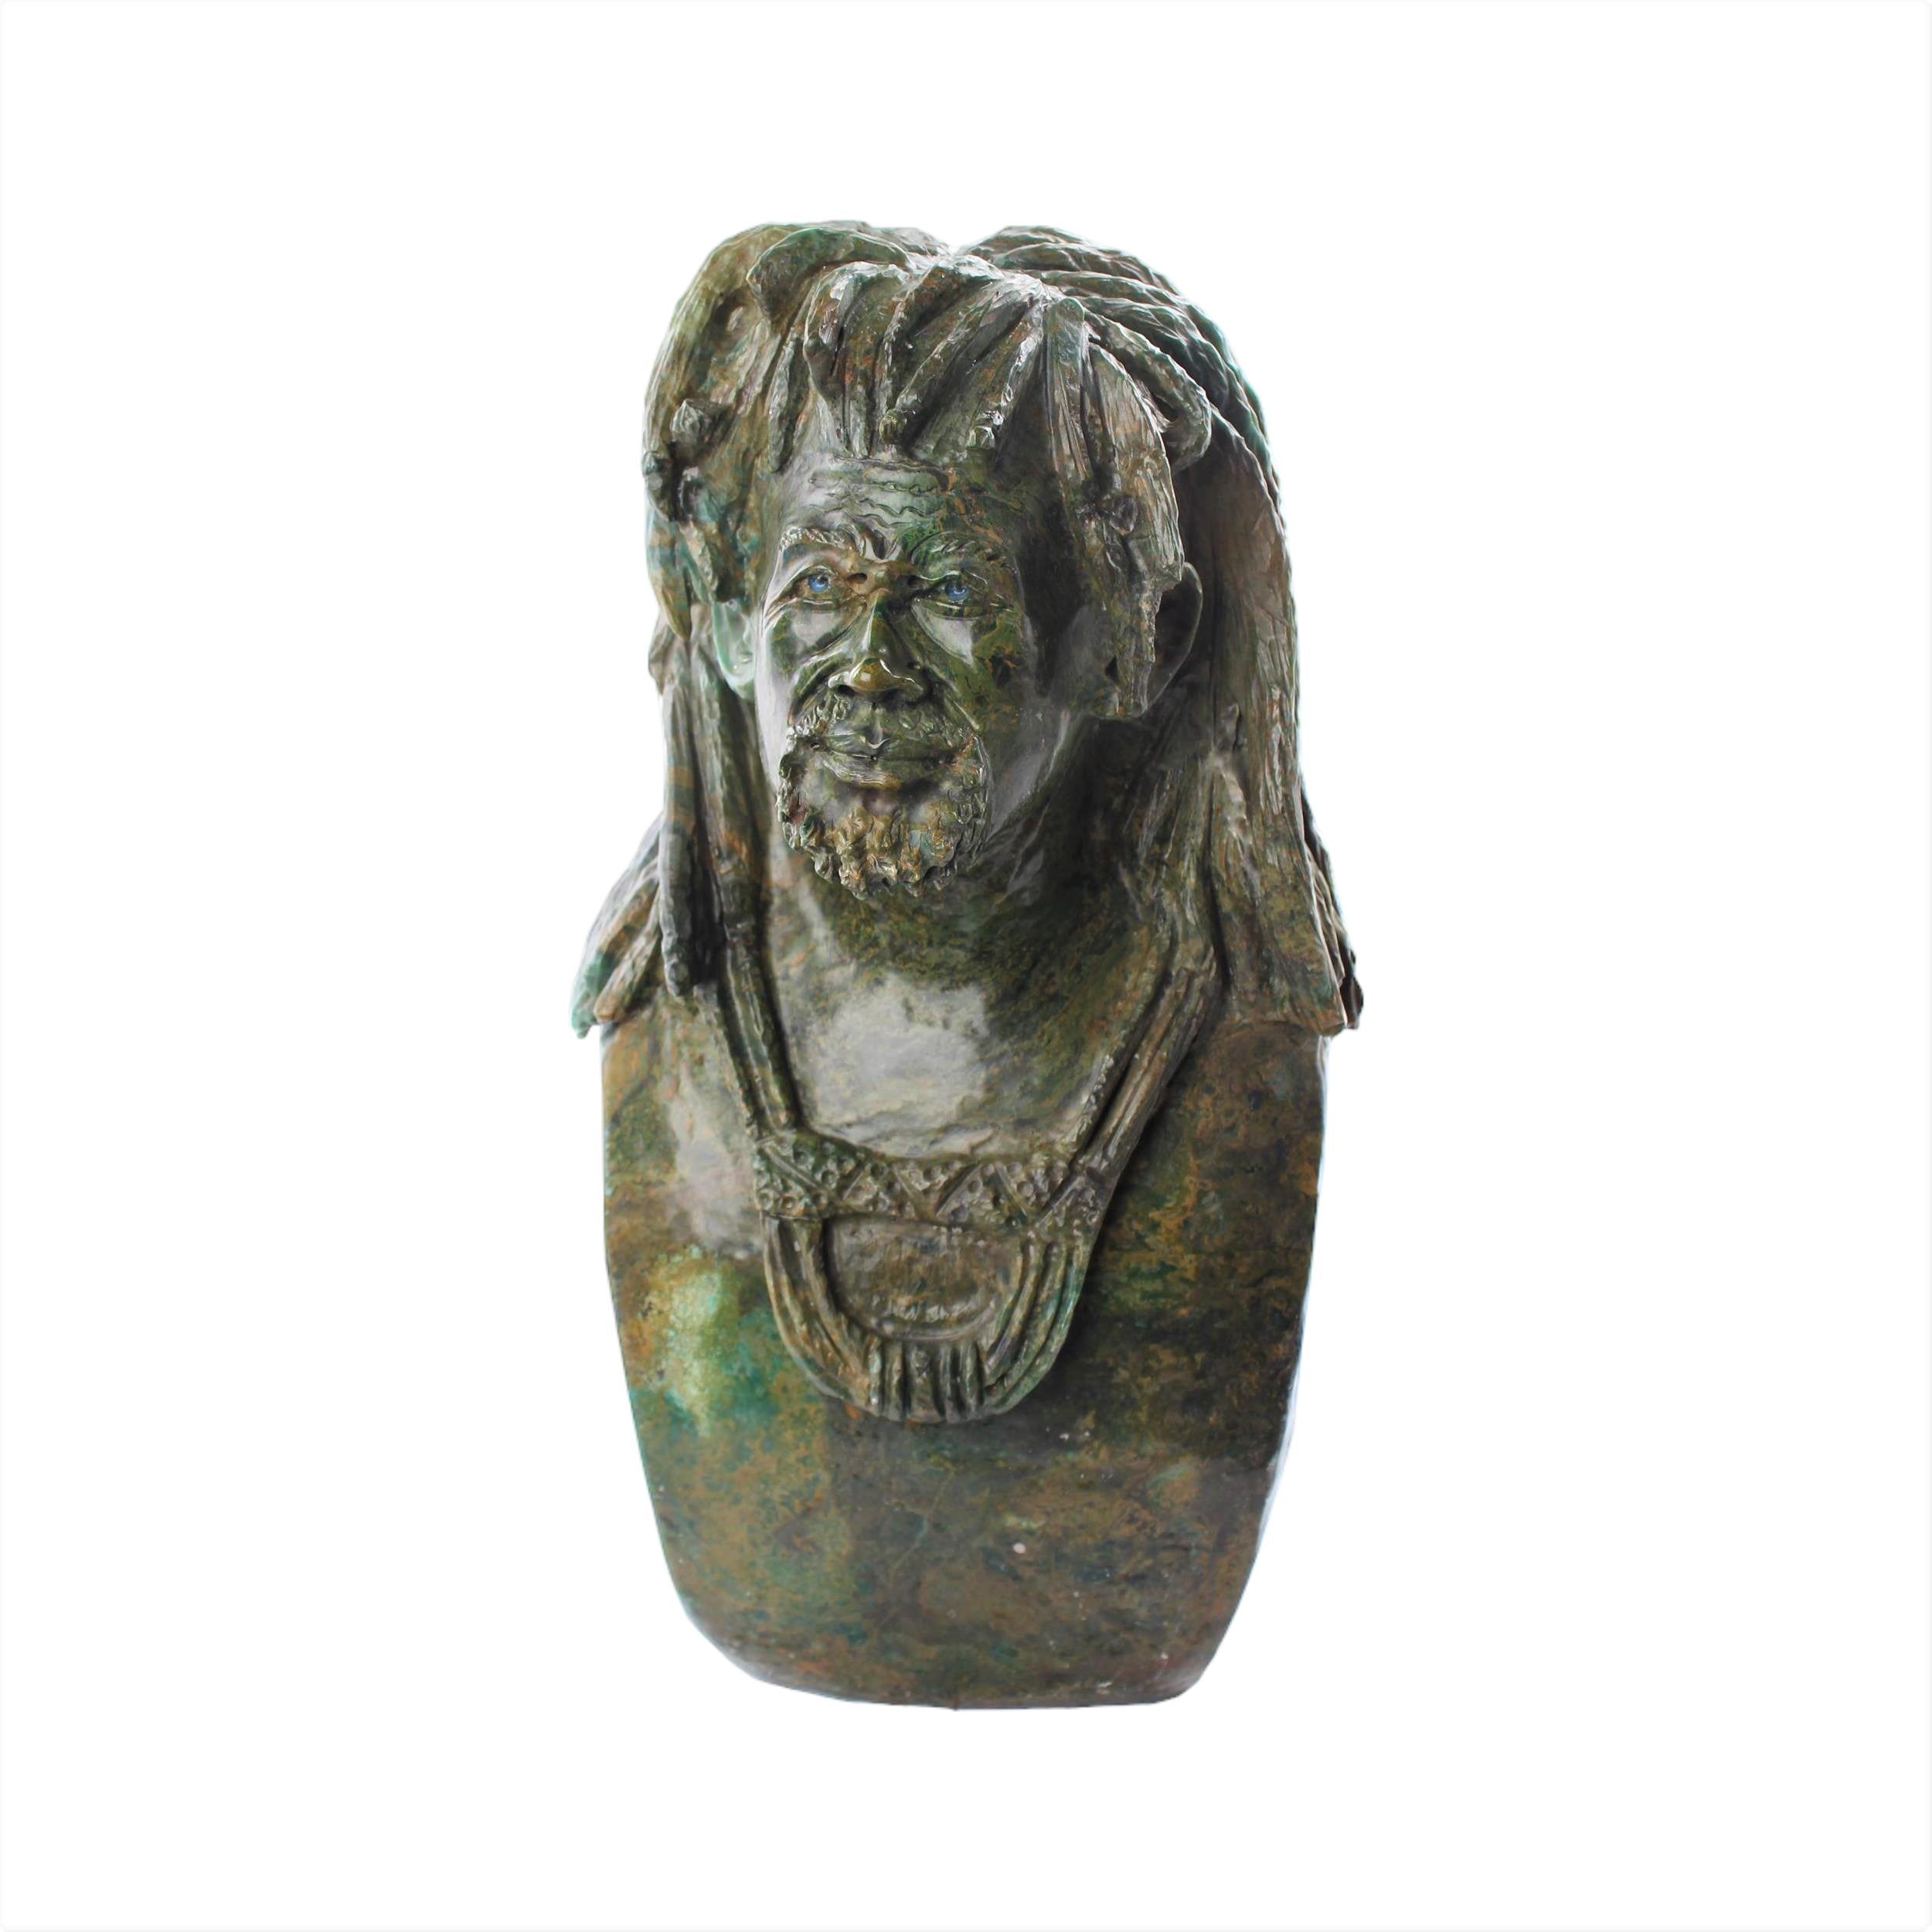 Shona Tribe Verdite Stone Busts ~20.5" Tall - Busts